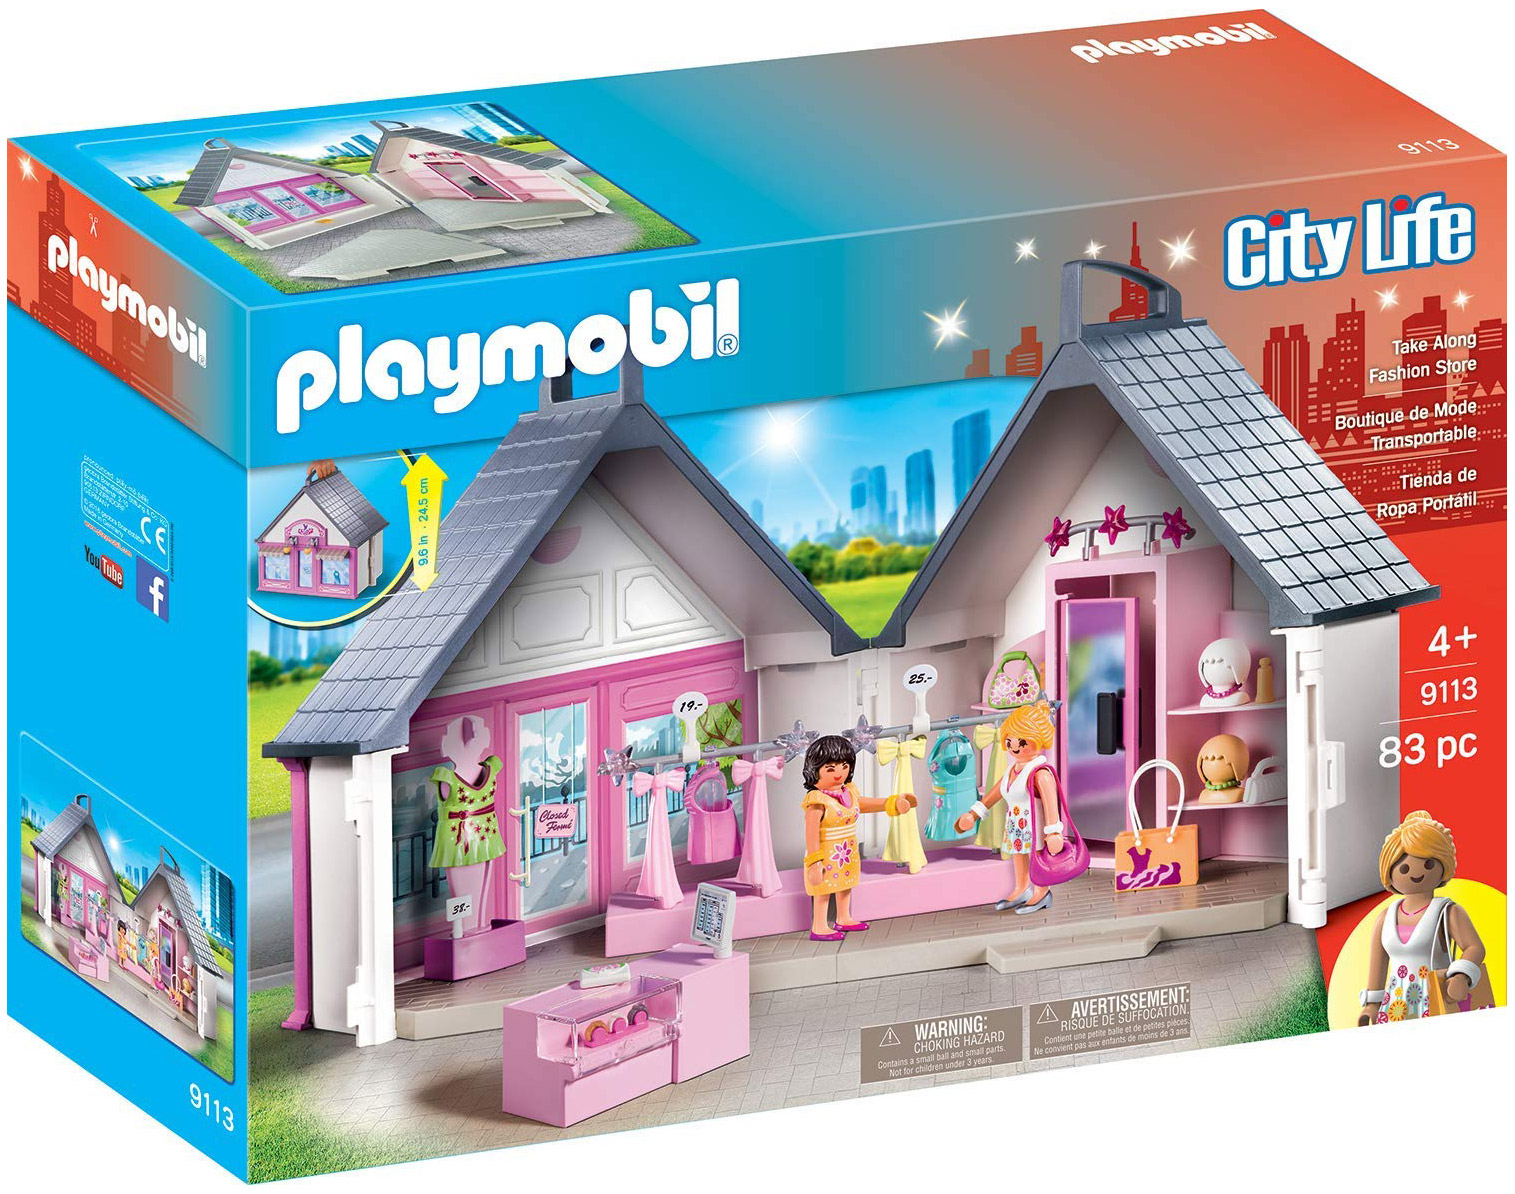 Playmobil City Life 9113 pas cher, Boutique de mode transportable